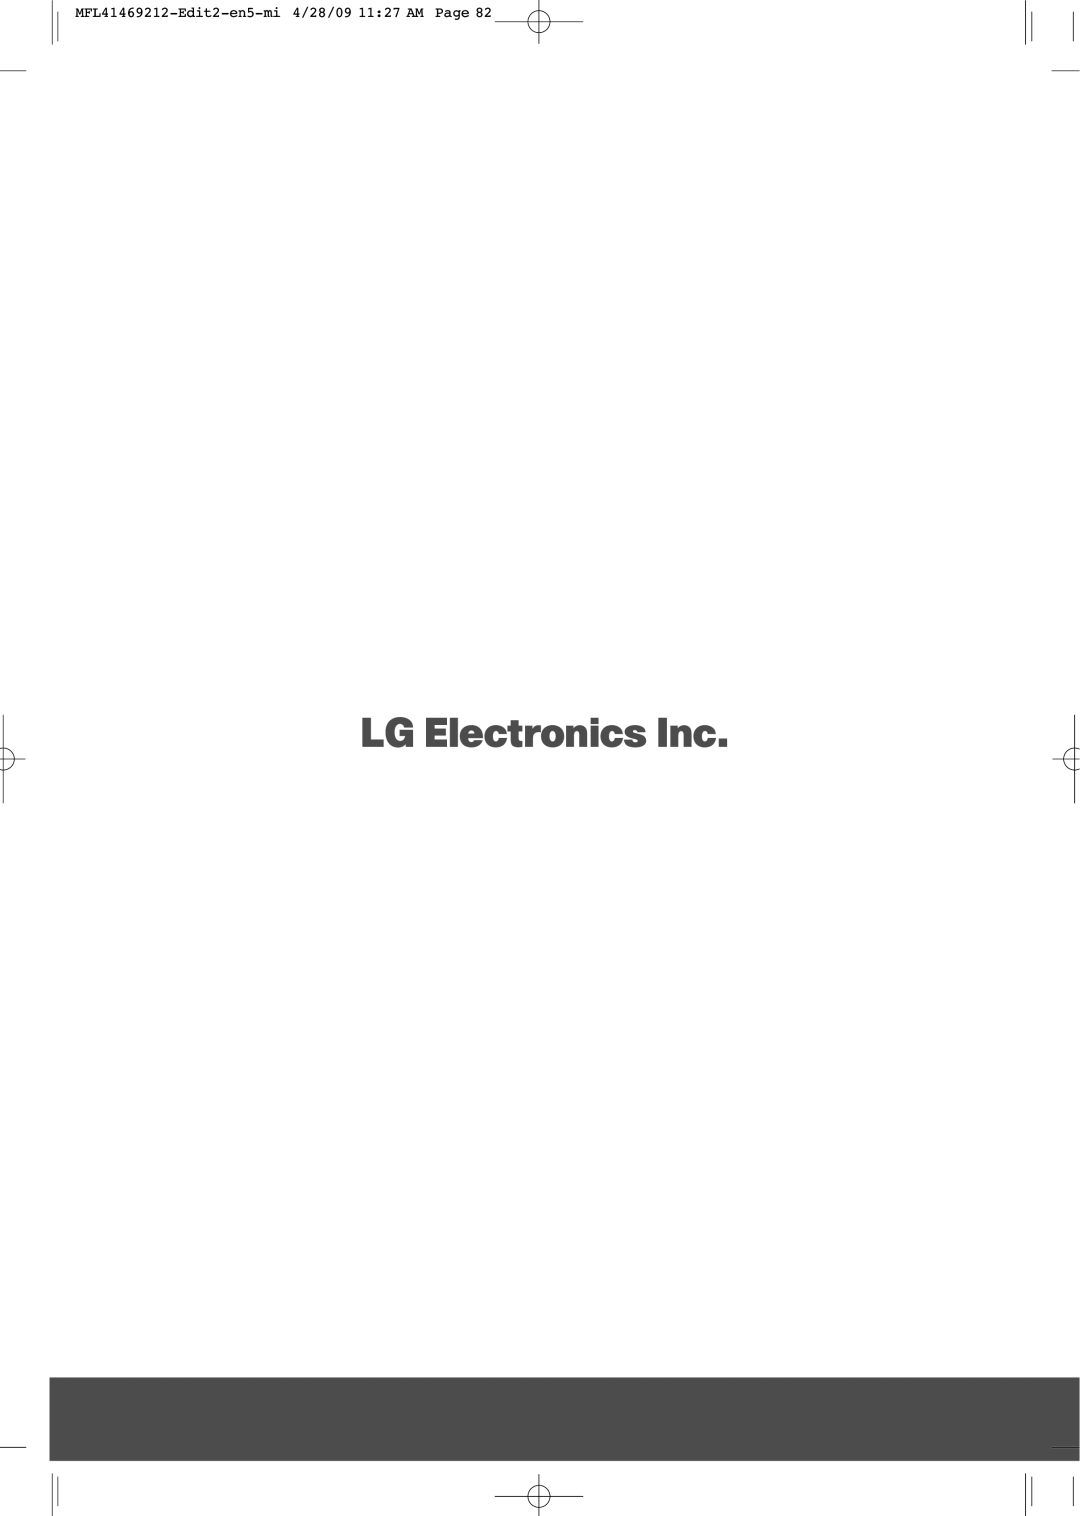 LG Electronics 2230R-MA manual MFL41469212-Edit2-en5-mi 4/28/09 1127 AM Page 